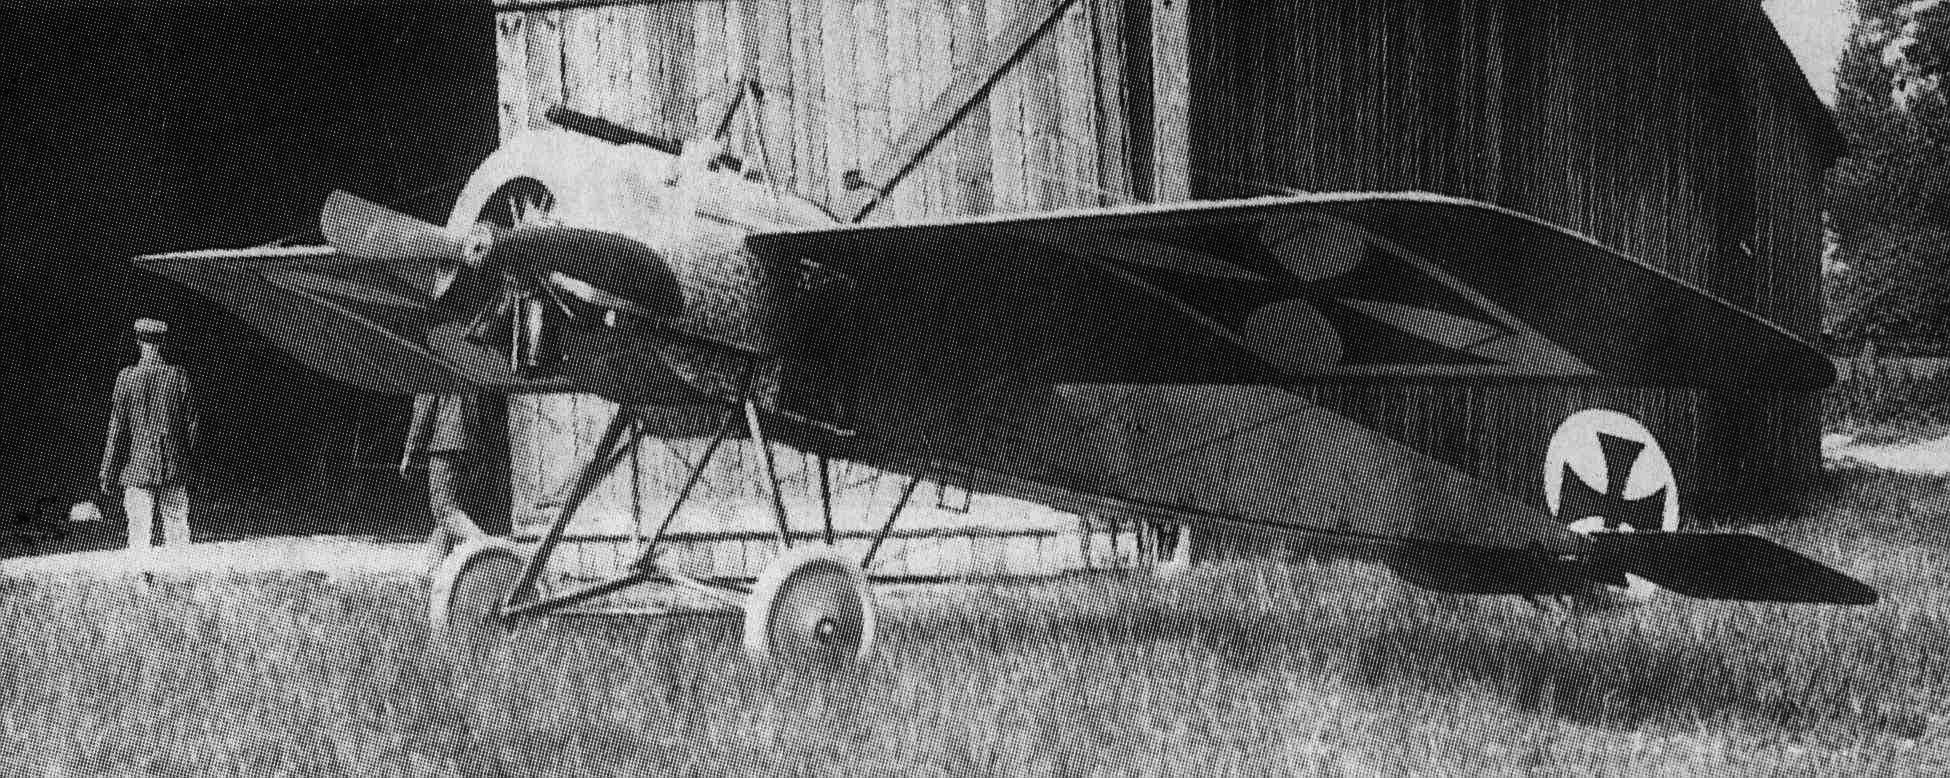 Leutnant Wintgens' Fokker M.5K/MG Endecker fighter, E.5/15.